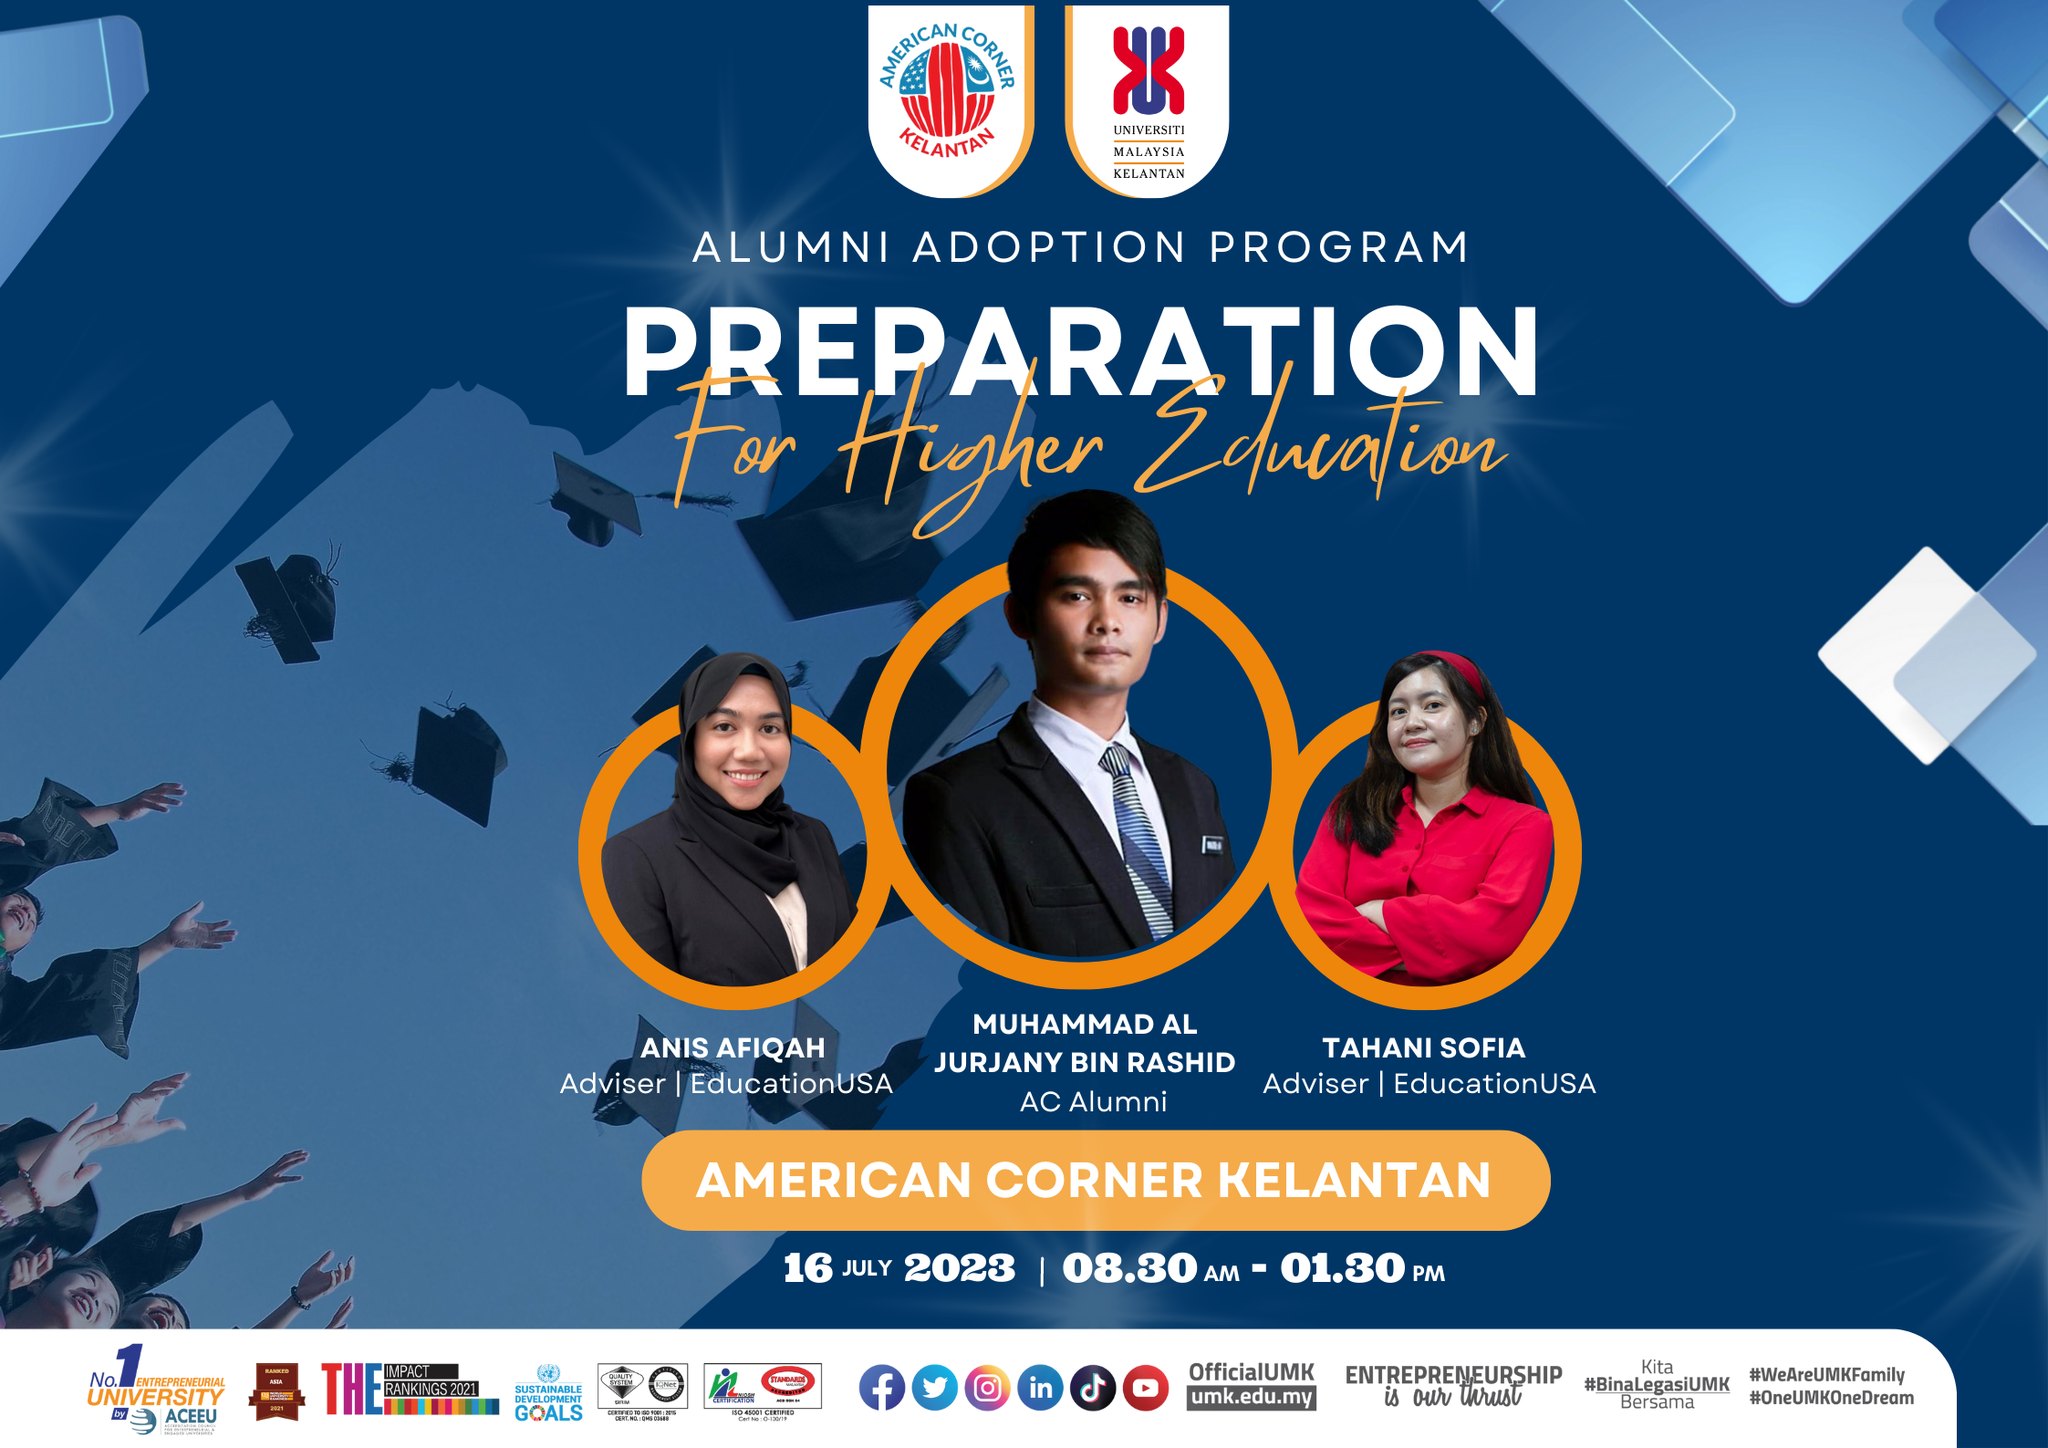 American Corner Kelantan - Alumni Adoption Program: Preparation for Higher Education (16 July 2023)